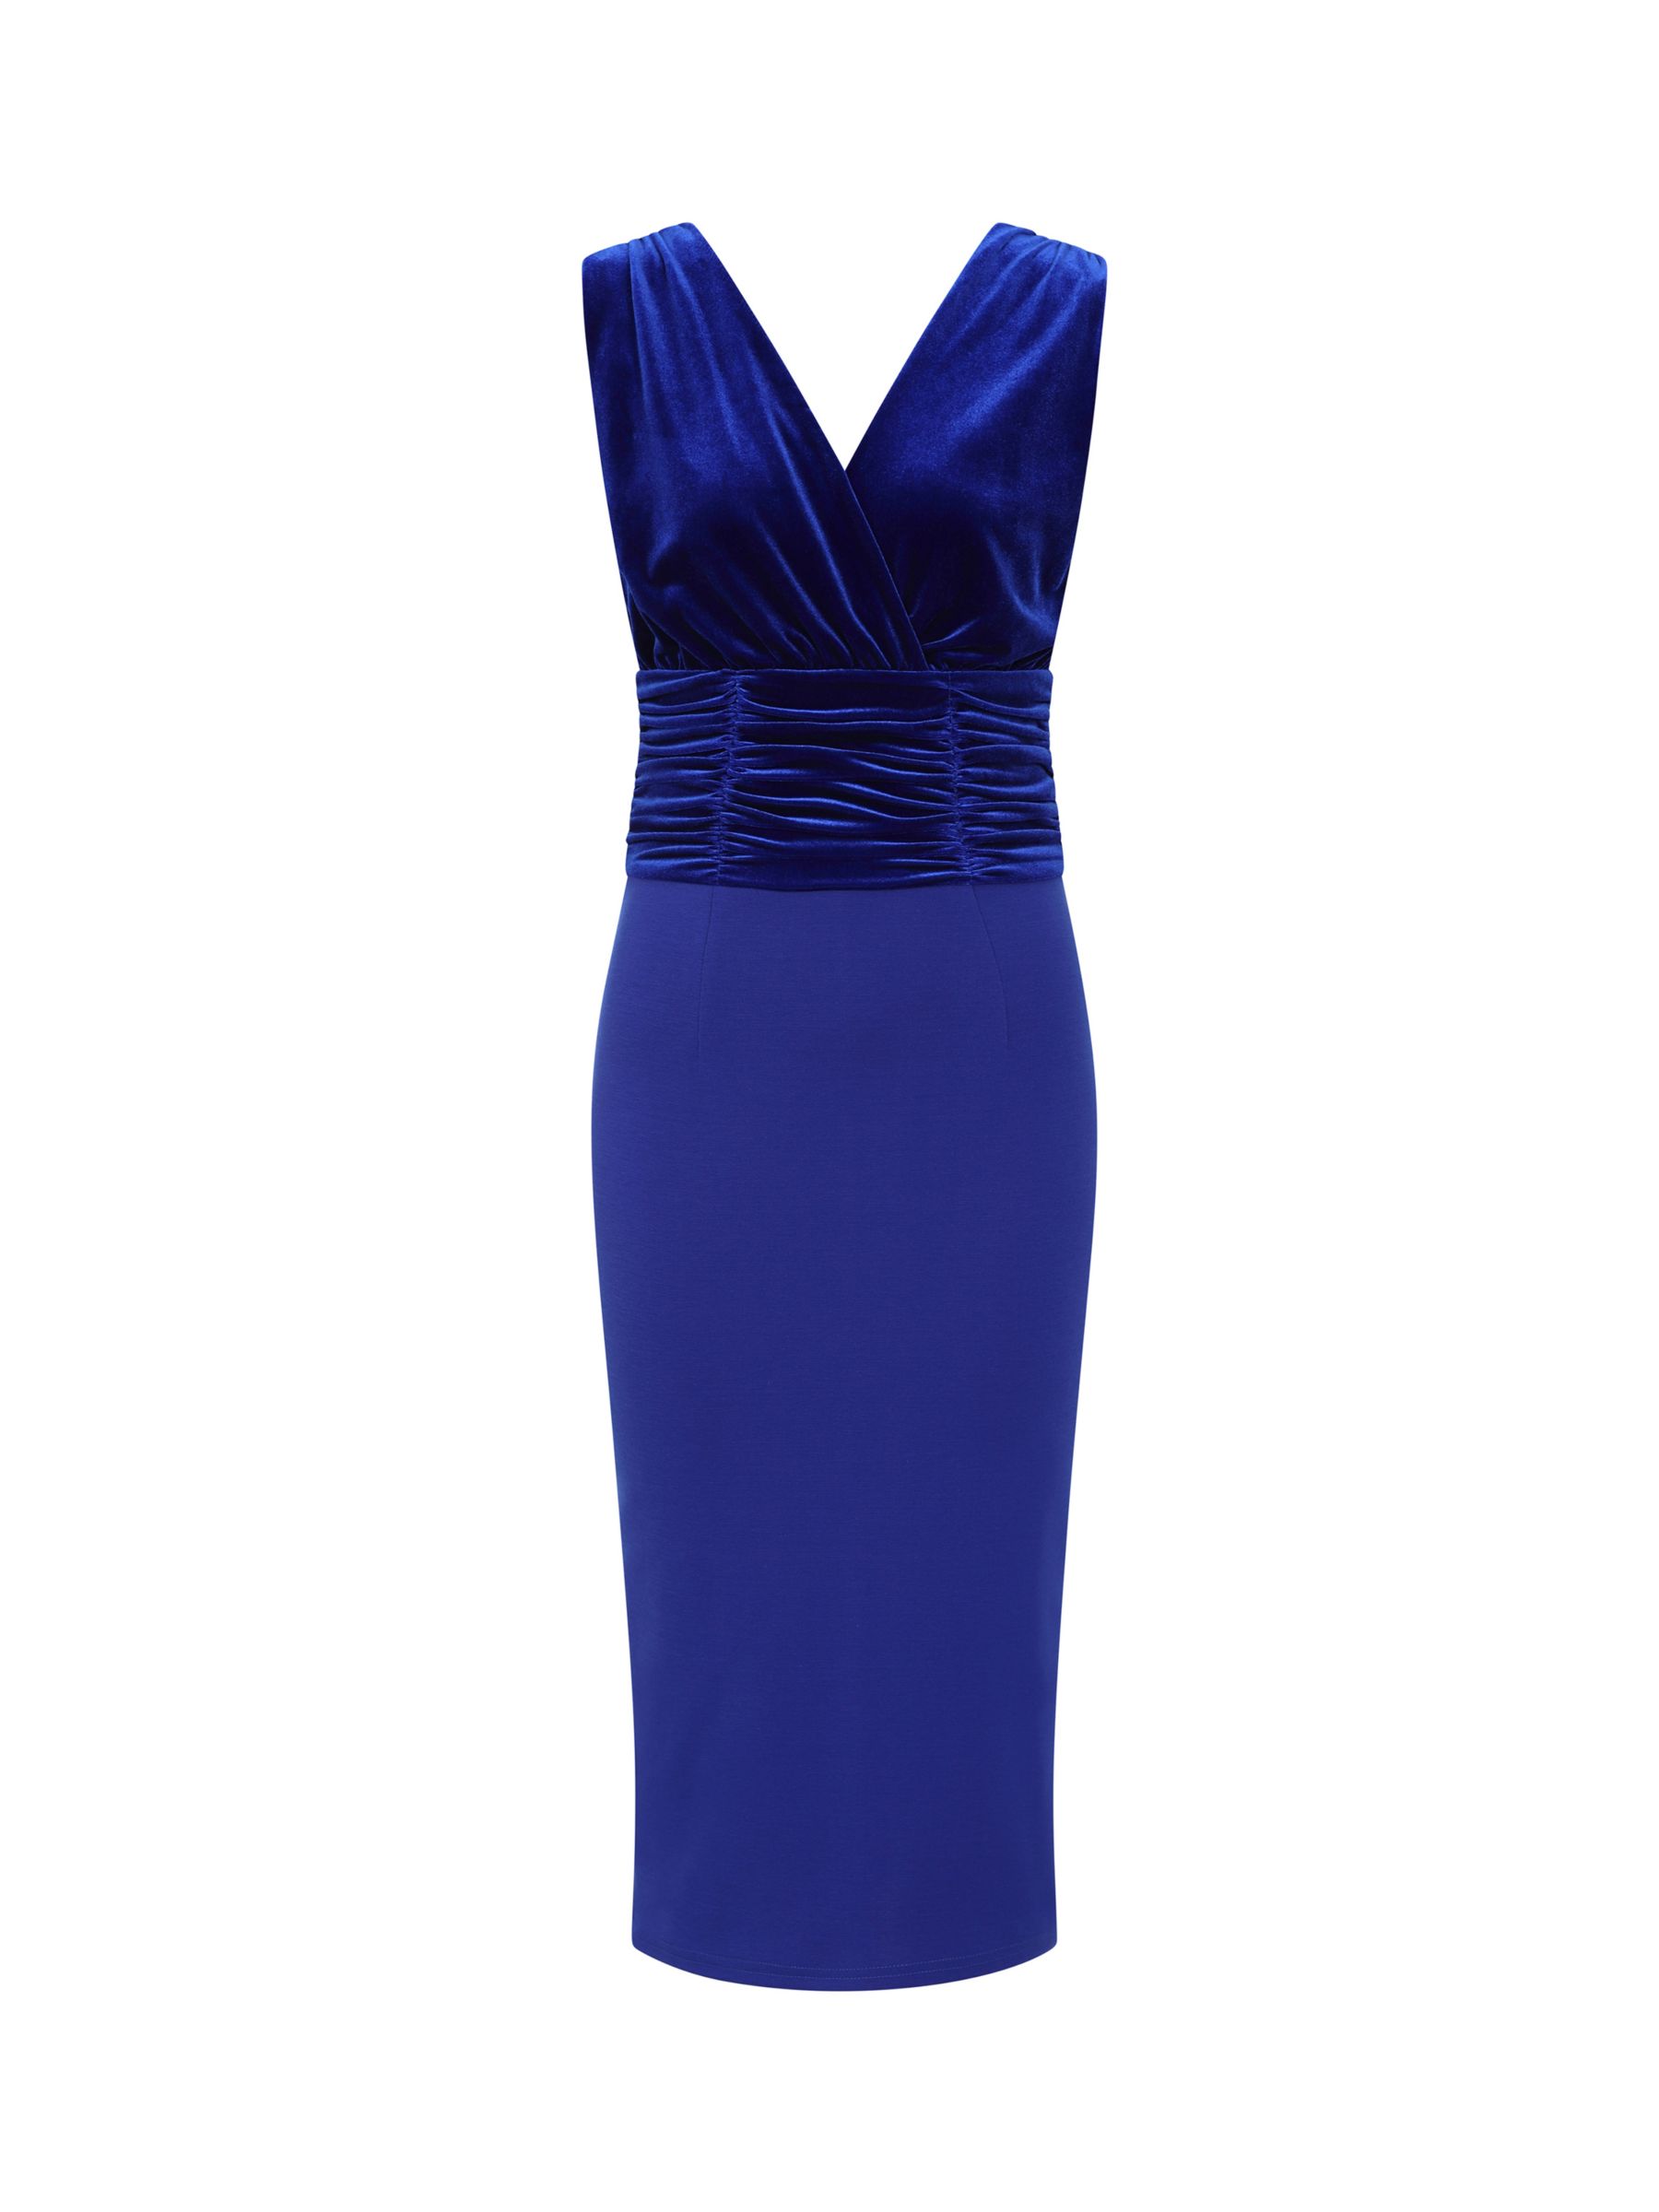 HotSquash Velvet Ruched Dress, Royal Blue, 16